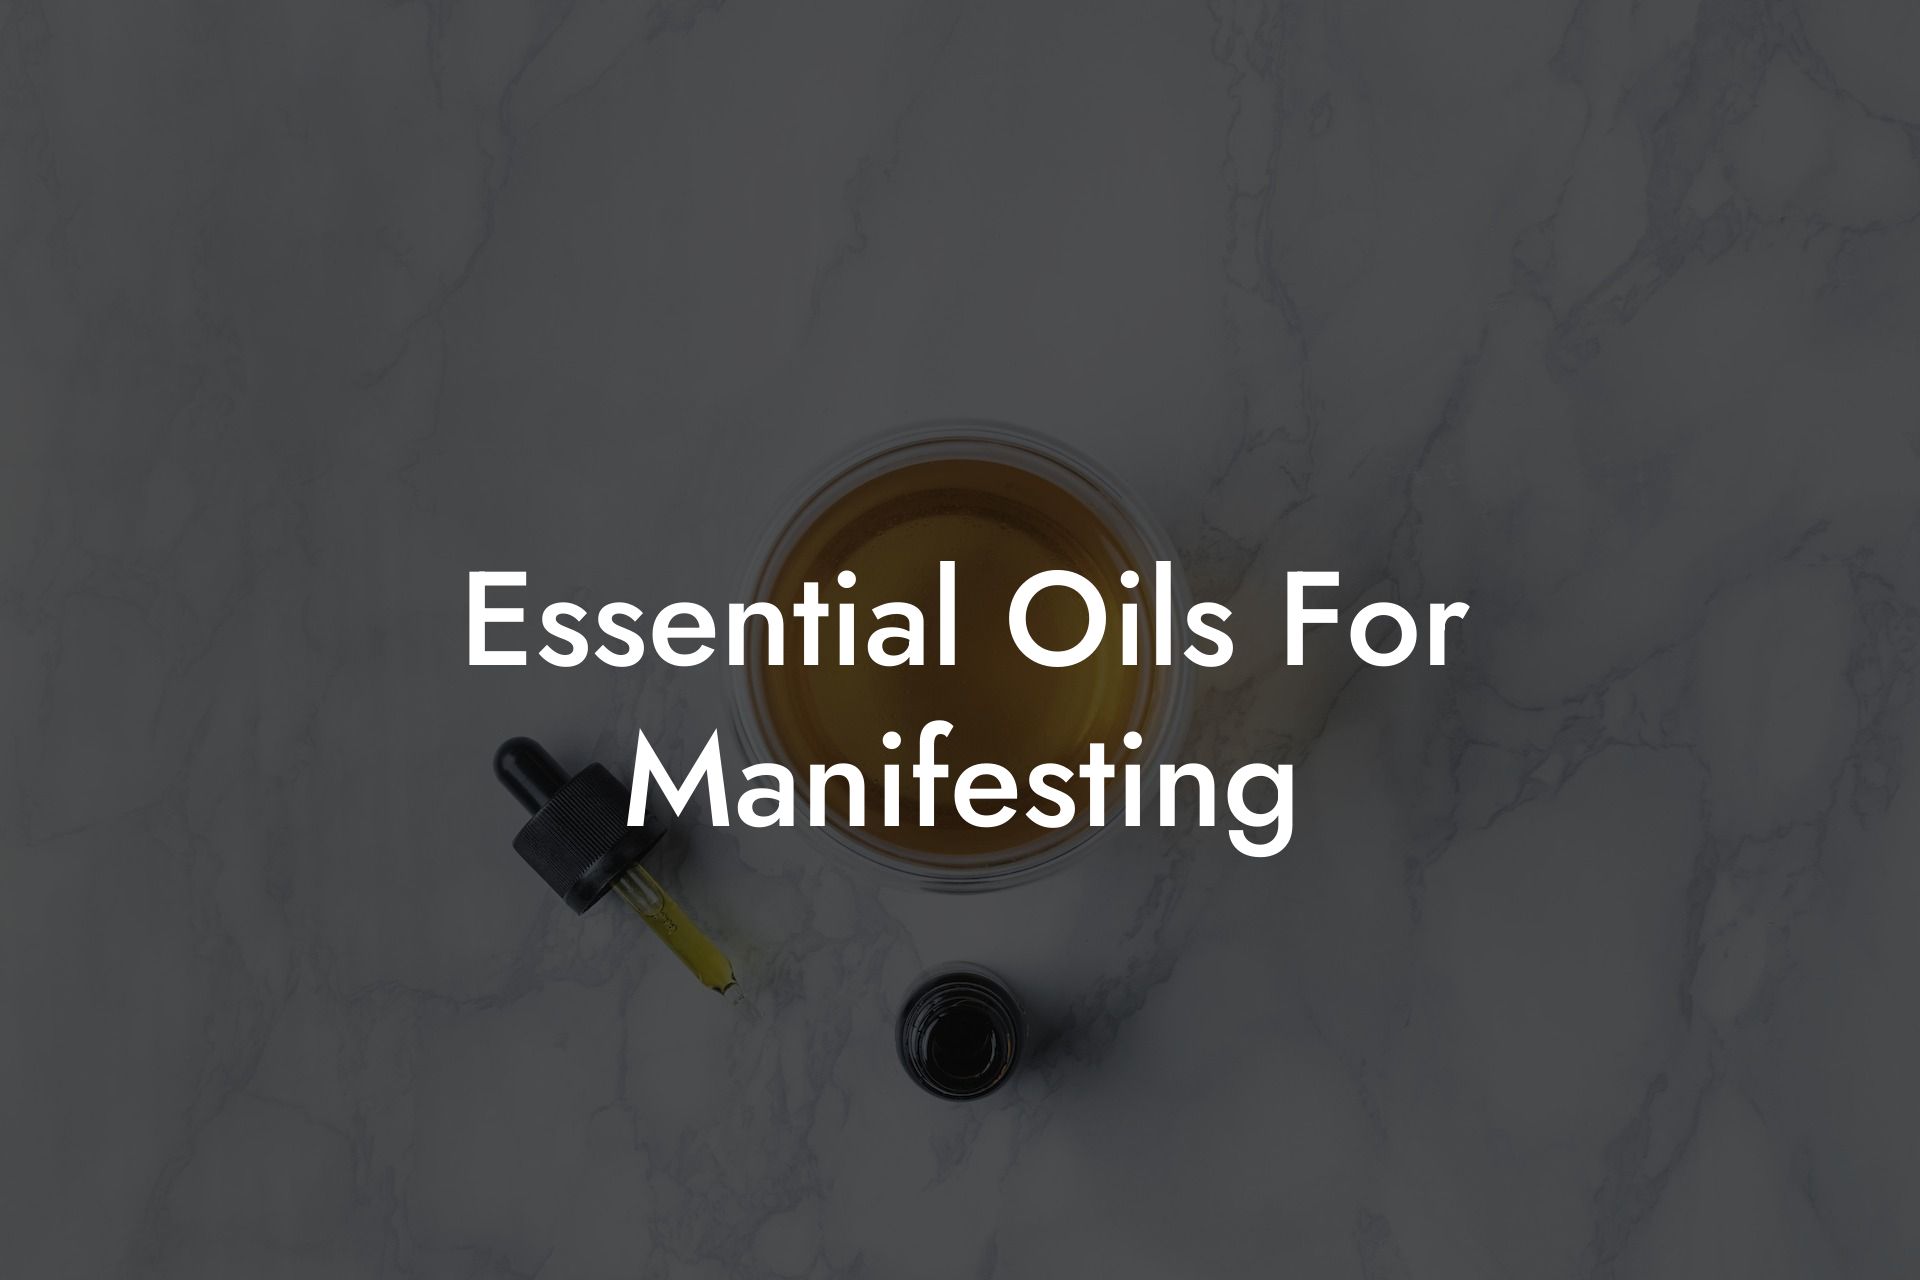 Essential Oils For Manifesting